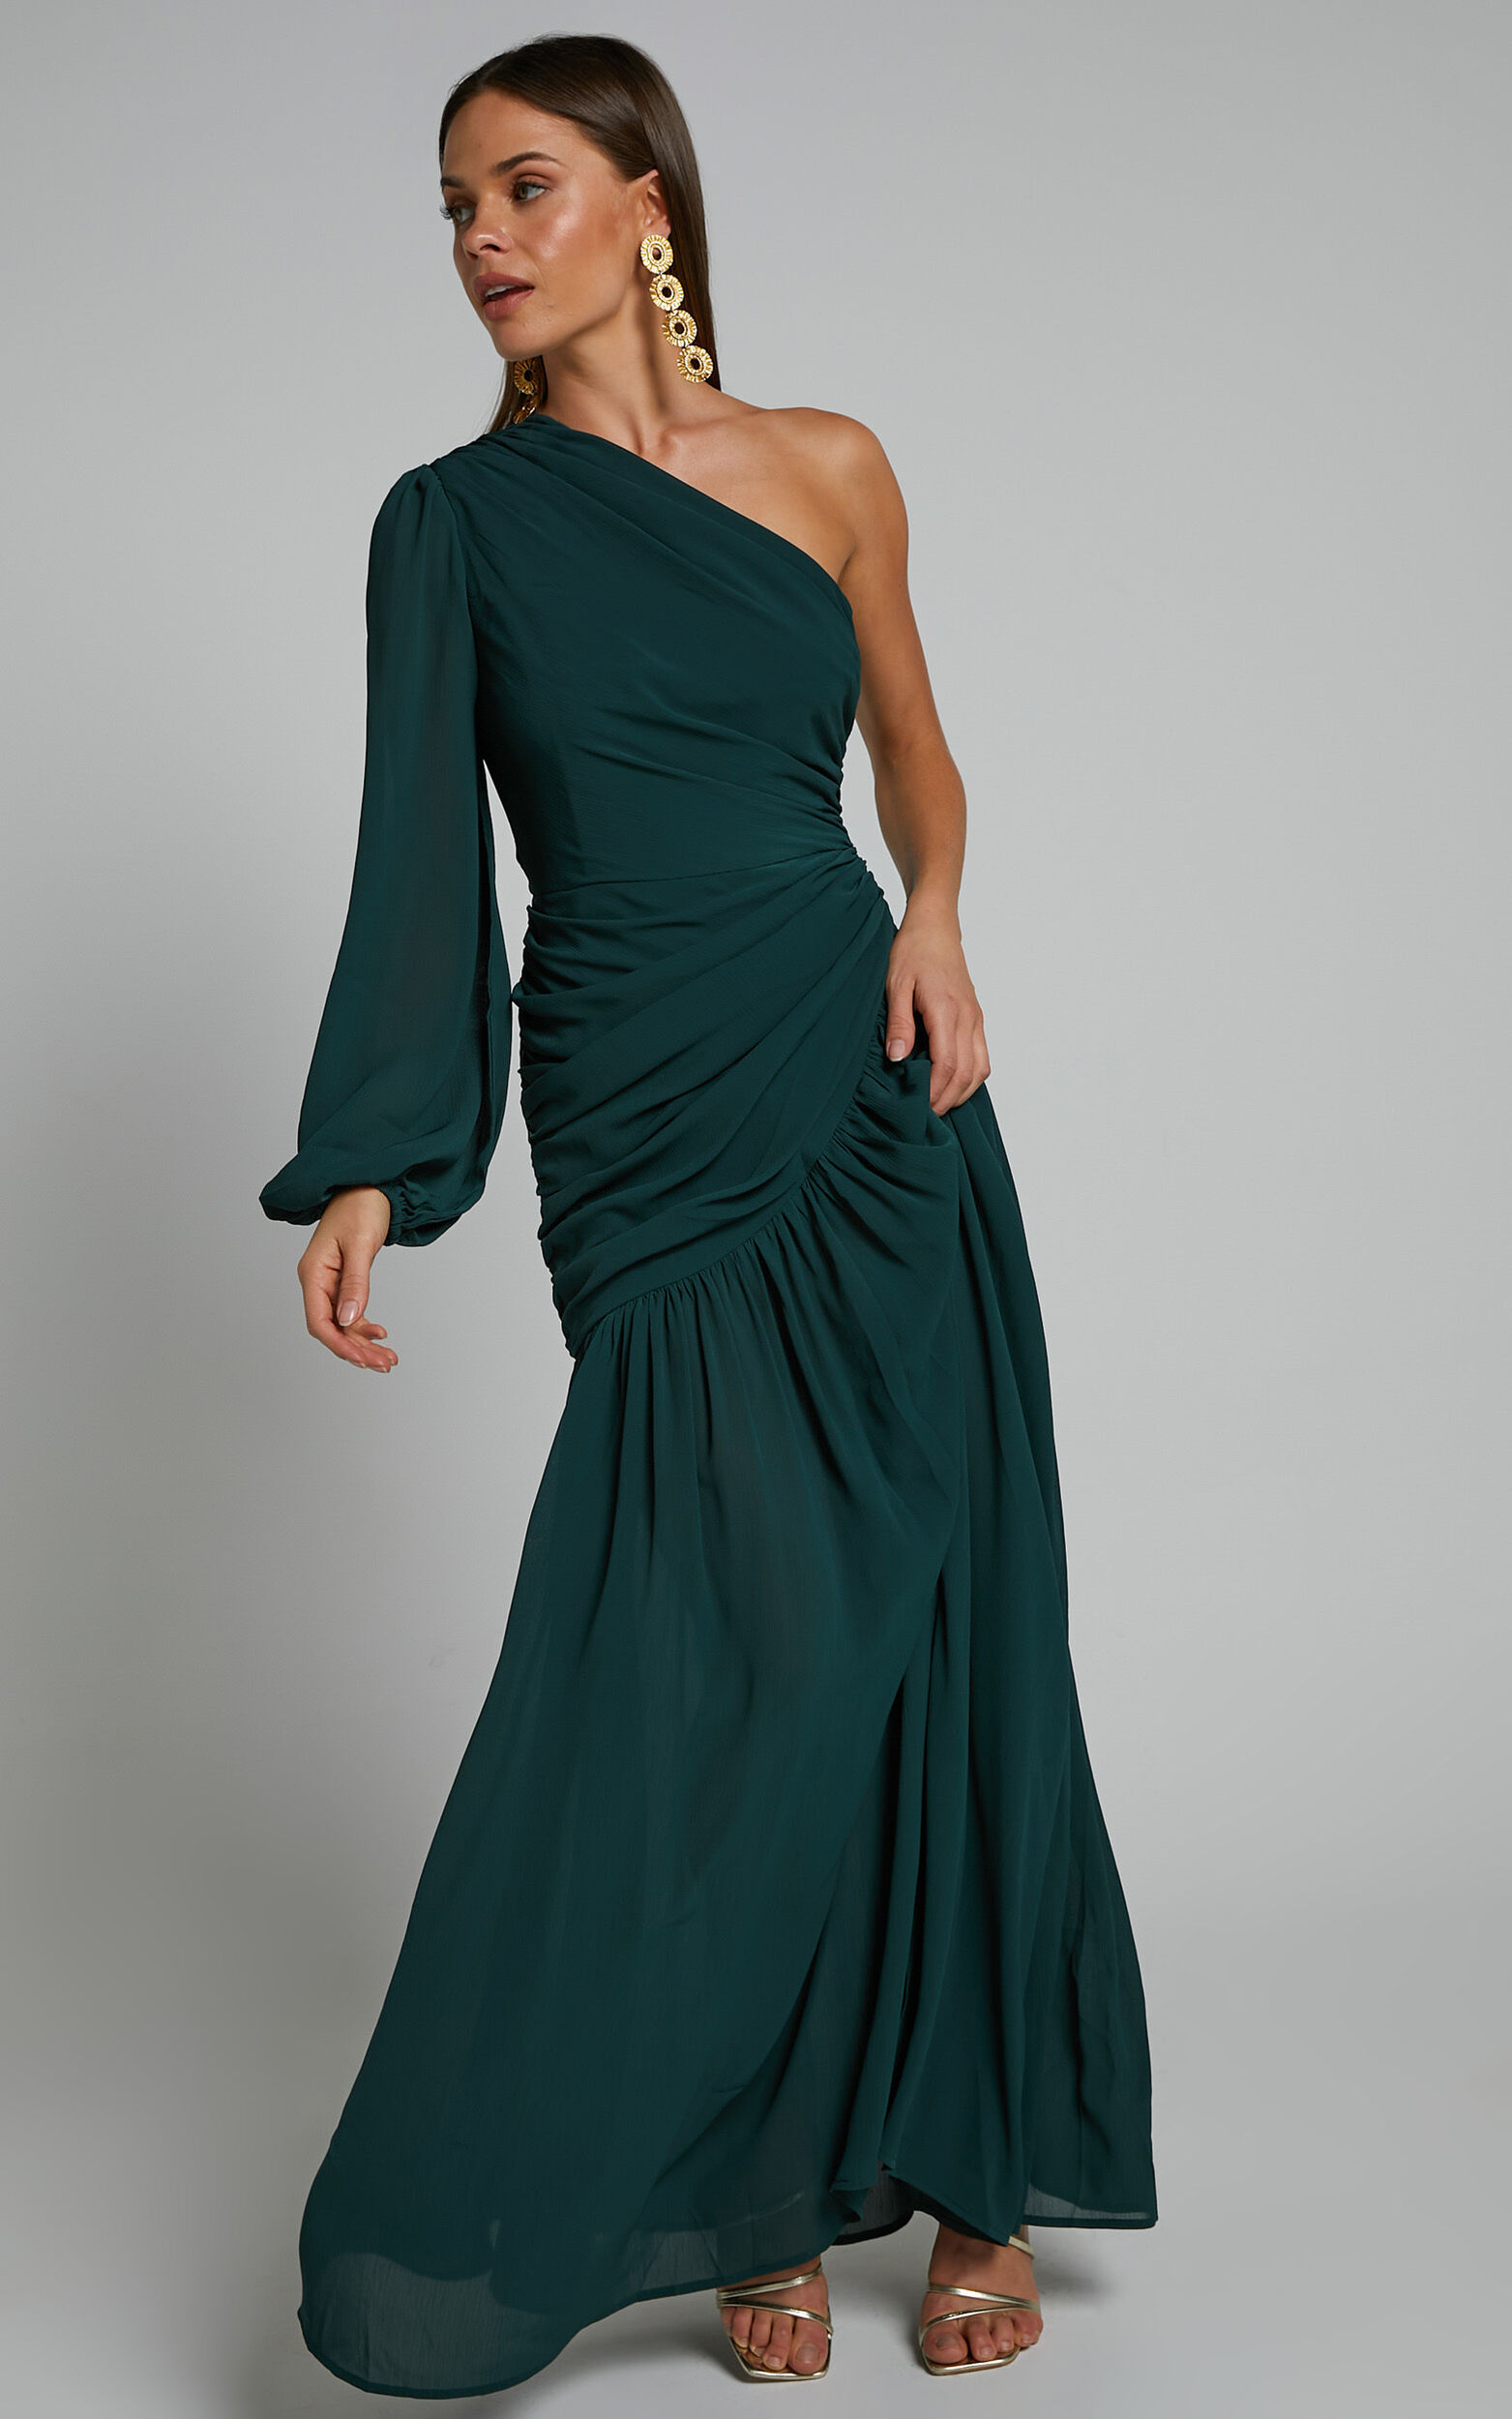 Grittah Midaxi Dress - One Shoulder Bishop Sleeve High Split Ruched Dress in Emerald - 04, GRN1